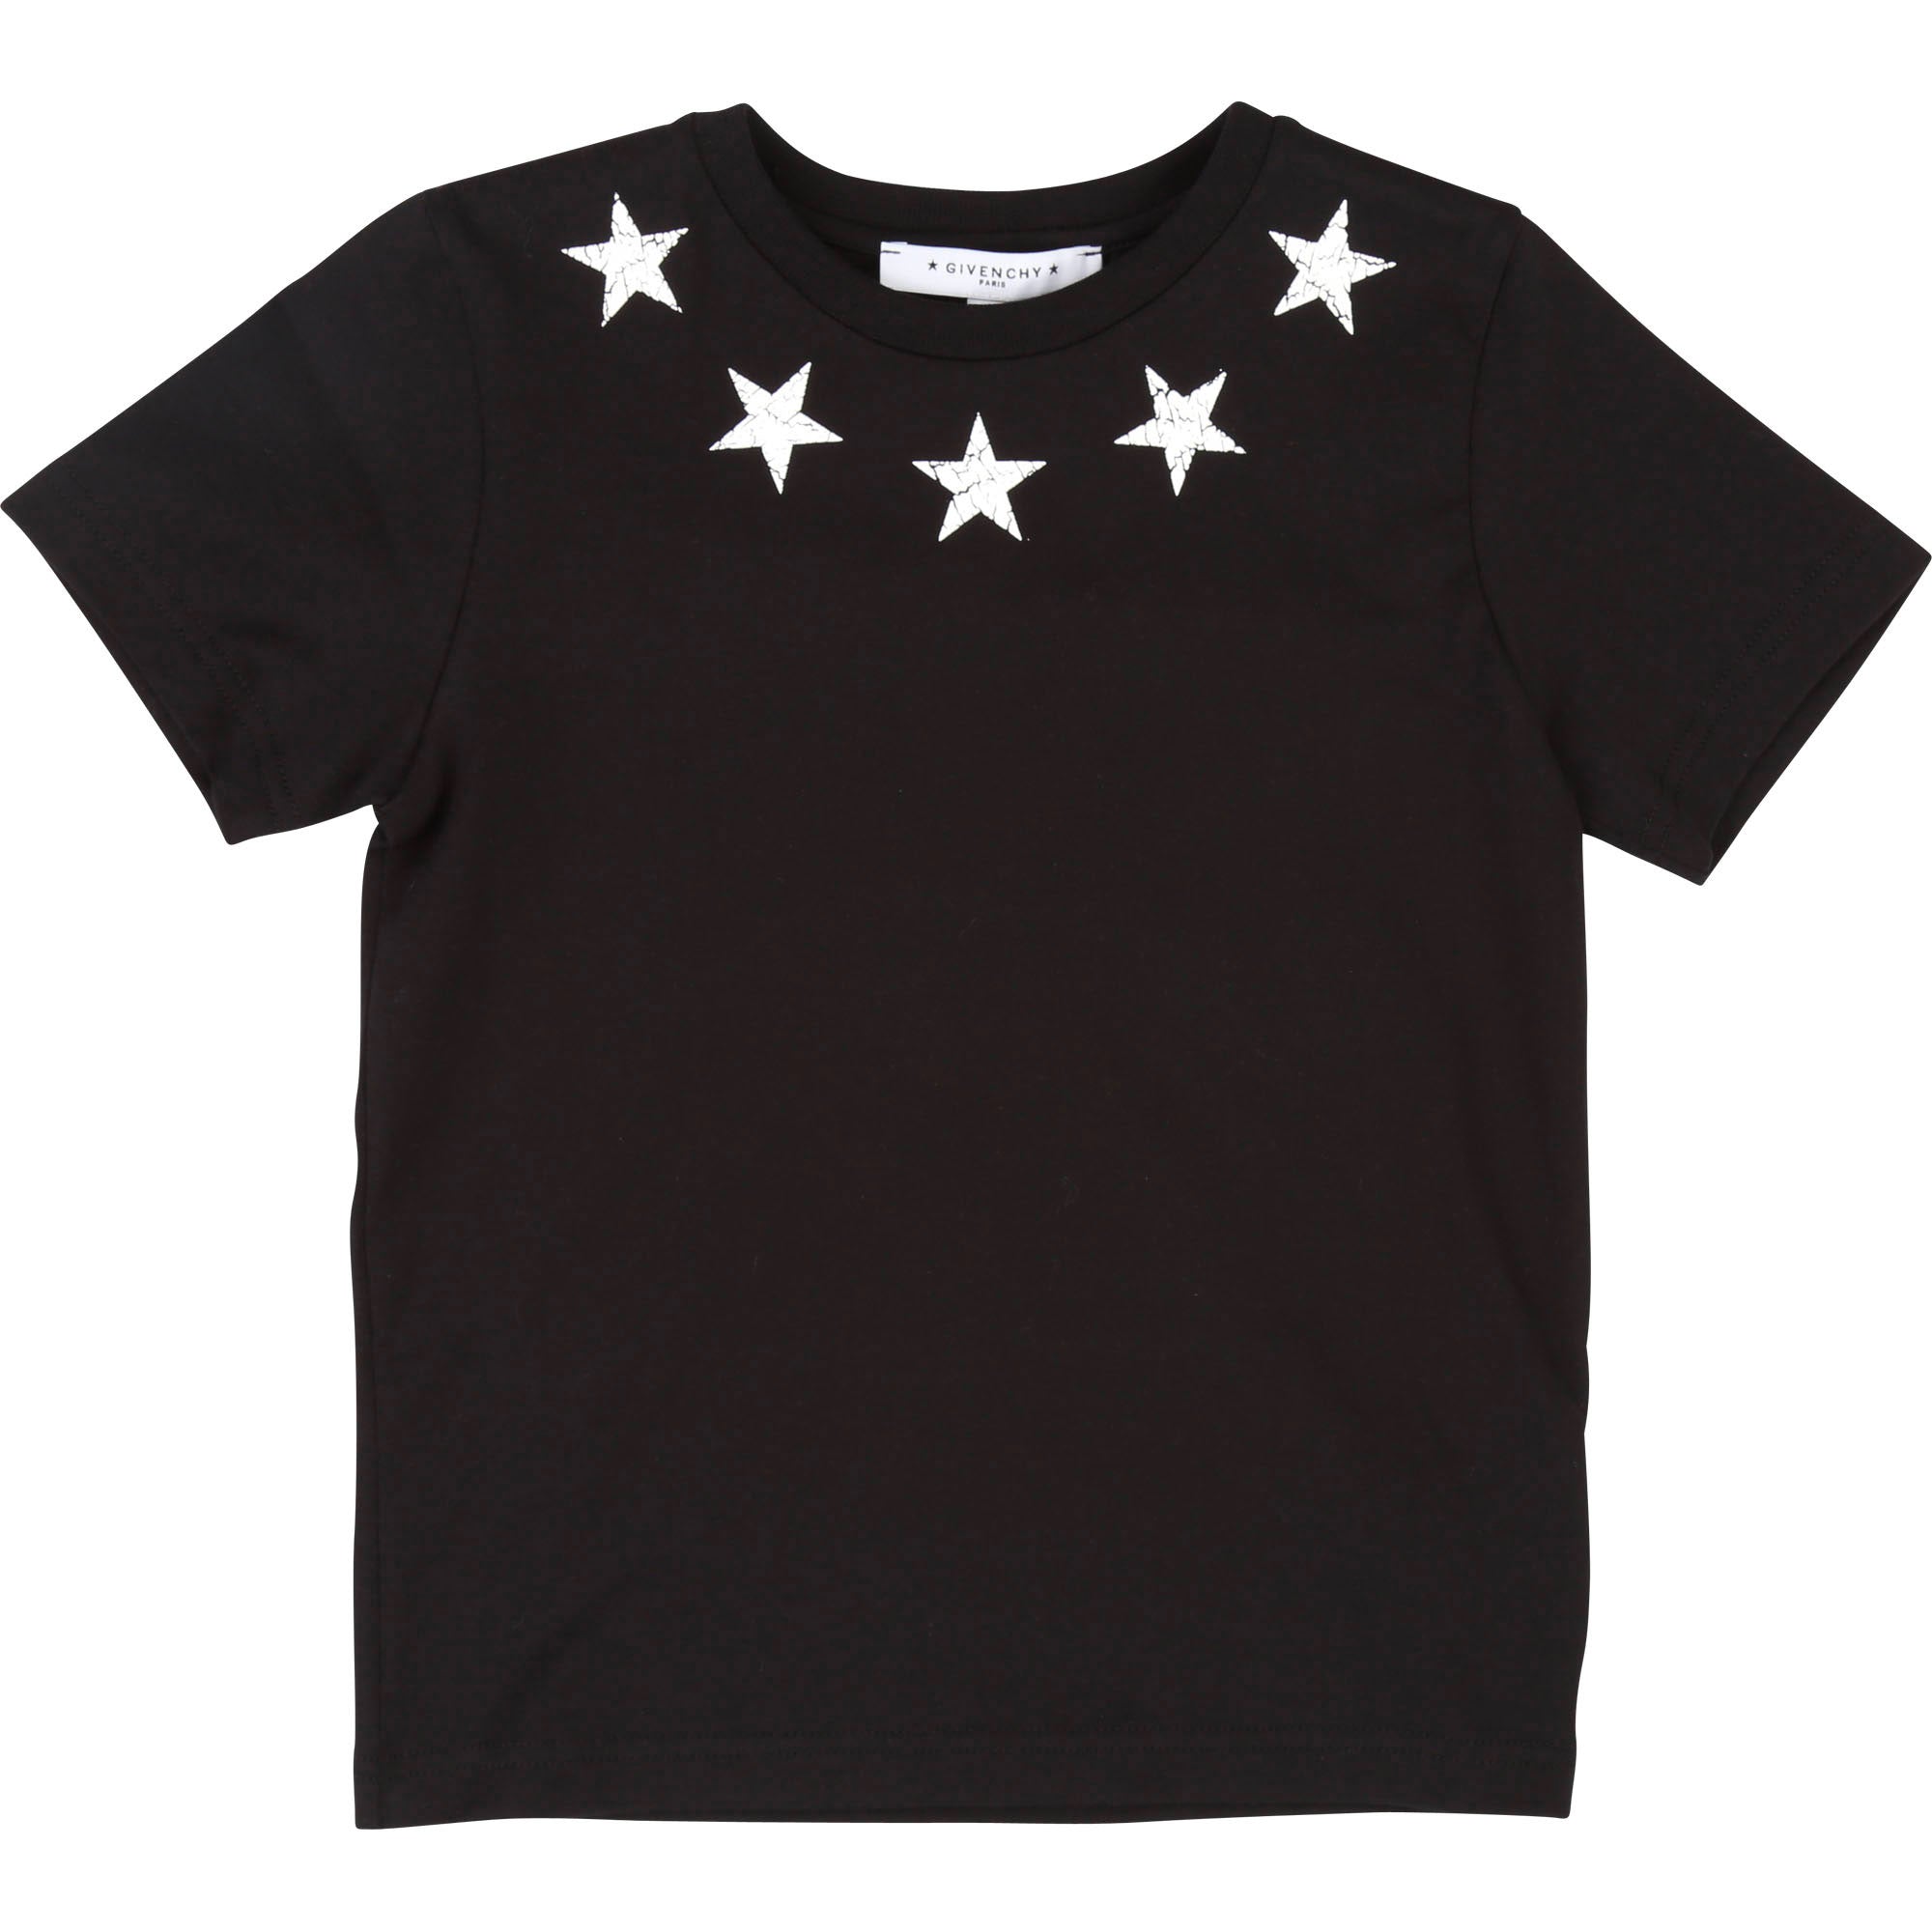 Boys Black Star Cotton T-shirt